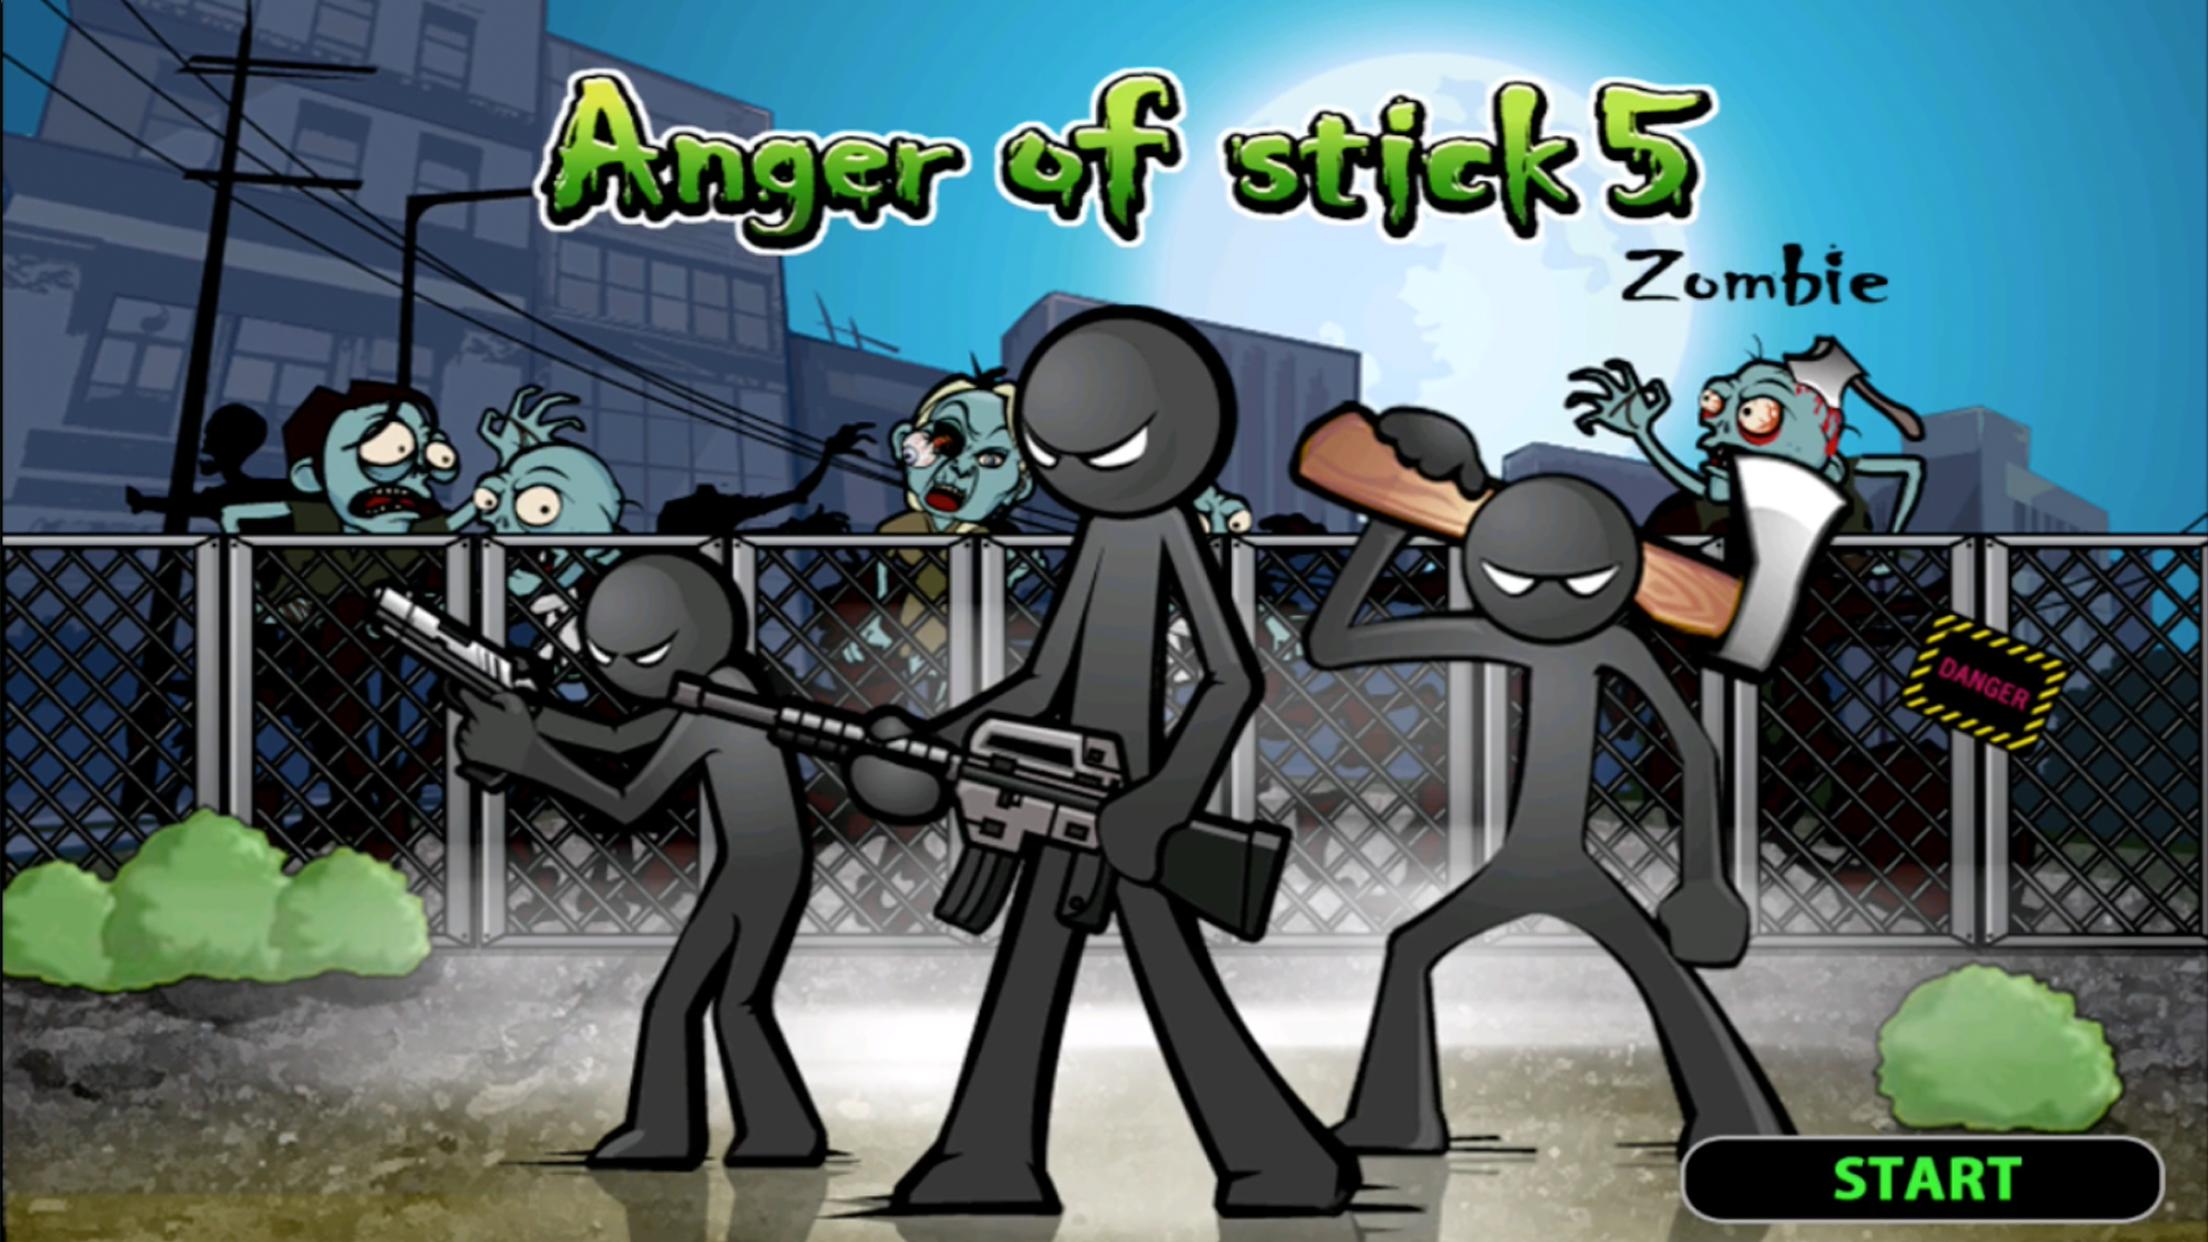 Игра про зомби 5. Игра Ангер оф стик 5. Ангер оф стик 5 зомби. Игра Anger of Stick 5 Zombie. Черные человечки игра.